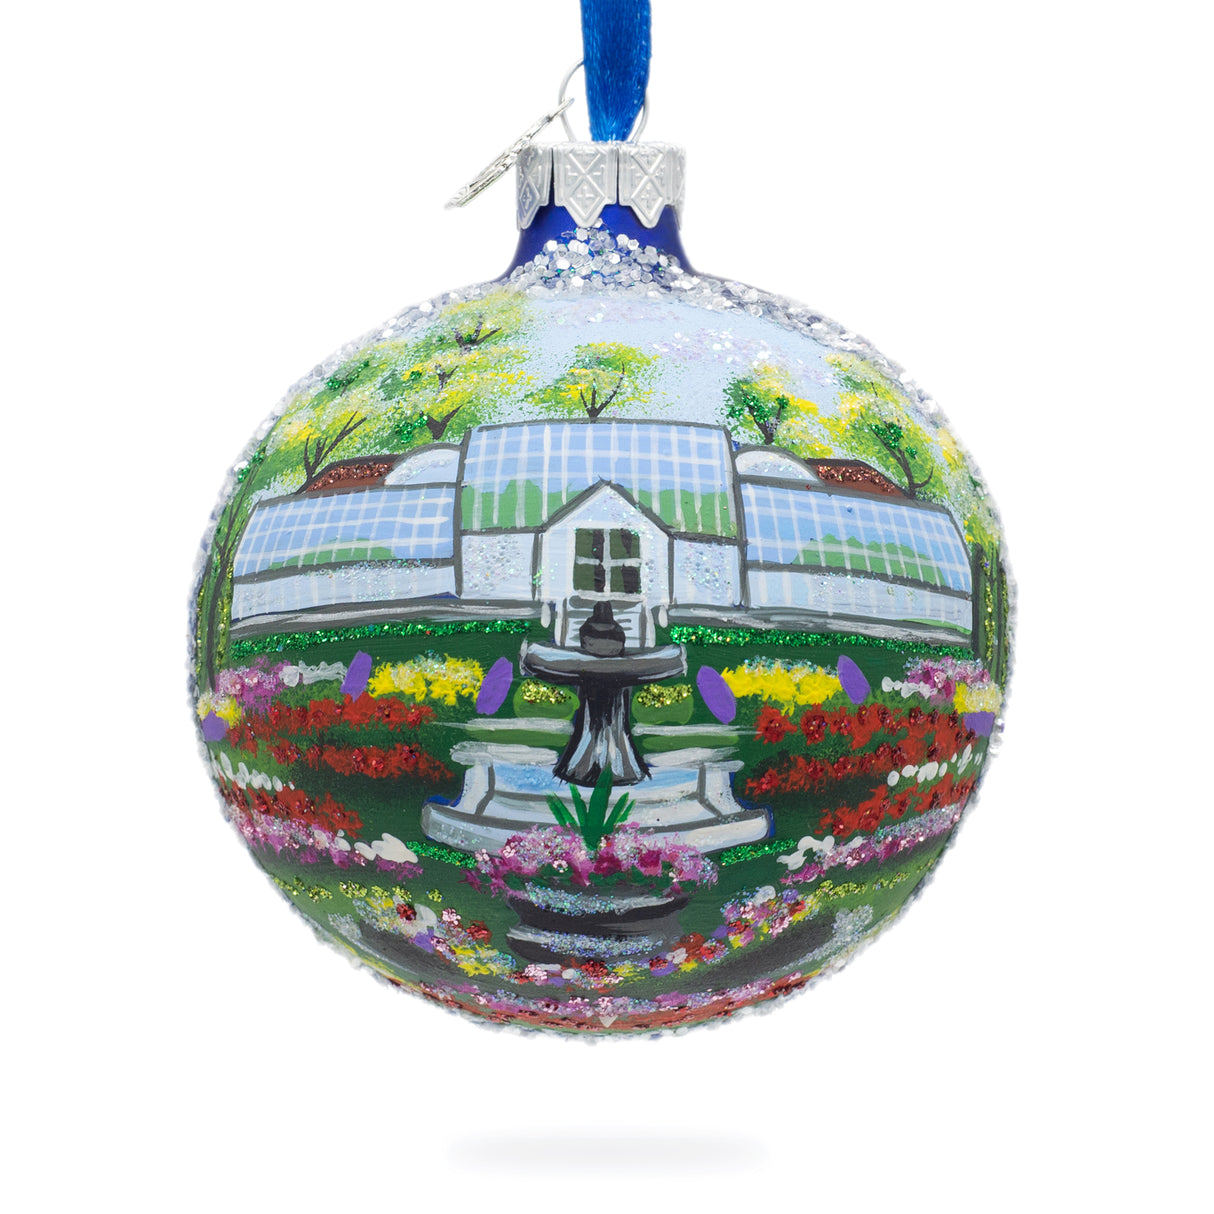 Glass Manito Park, Spokane, Washington, USA Glass Ball Christmas Ornament 3.25 Inches in Multi color Round